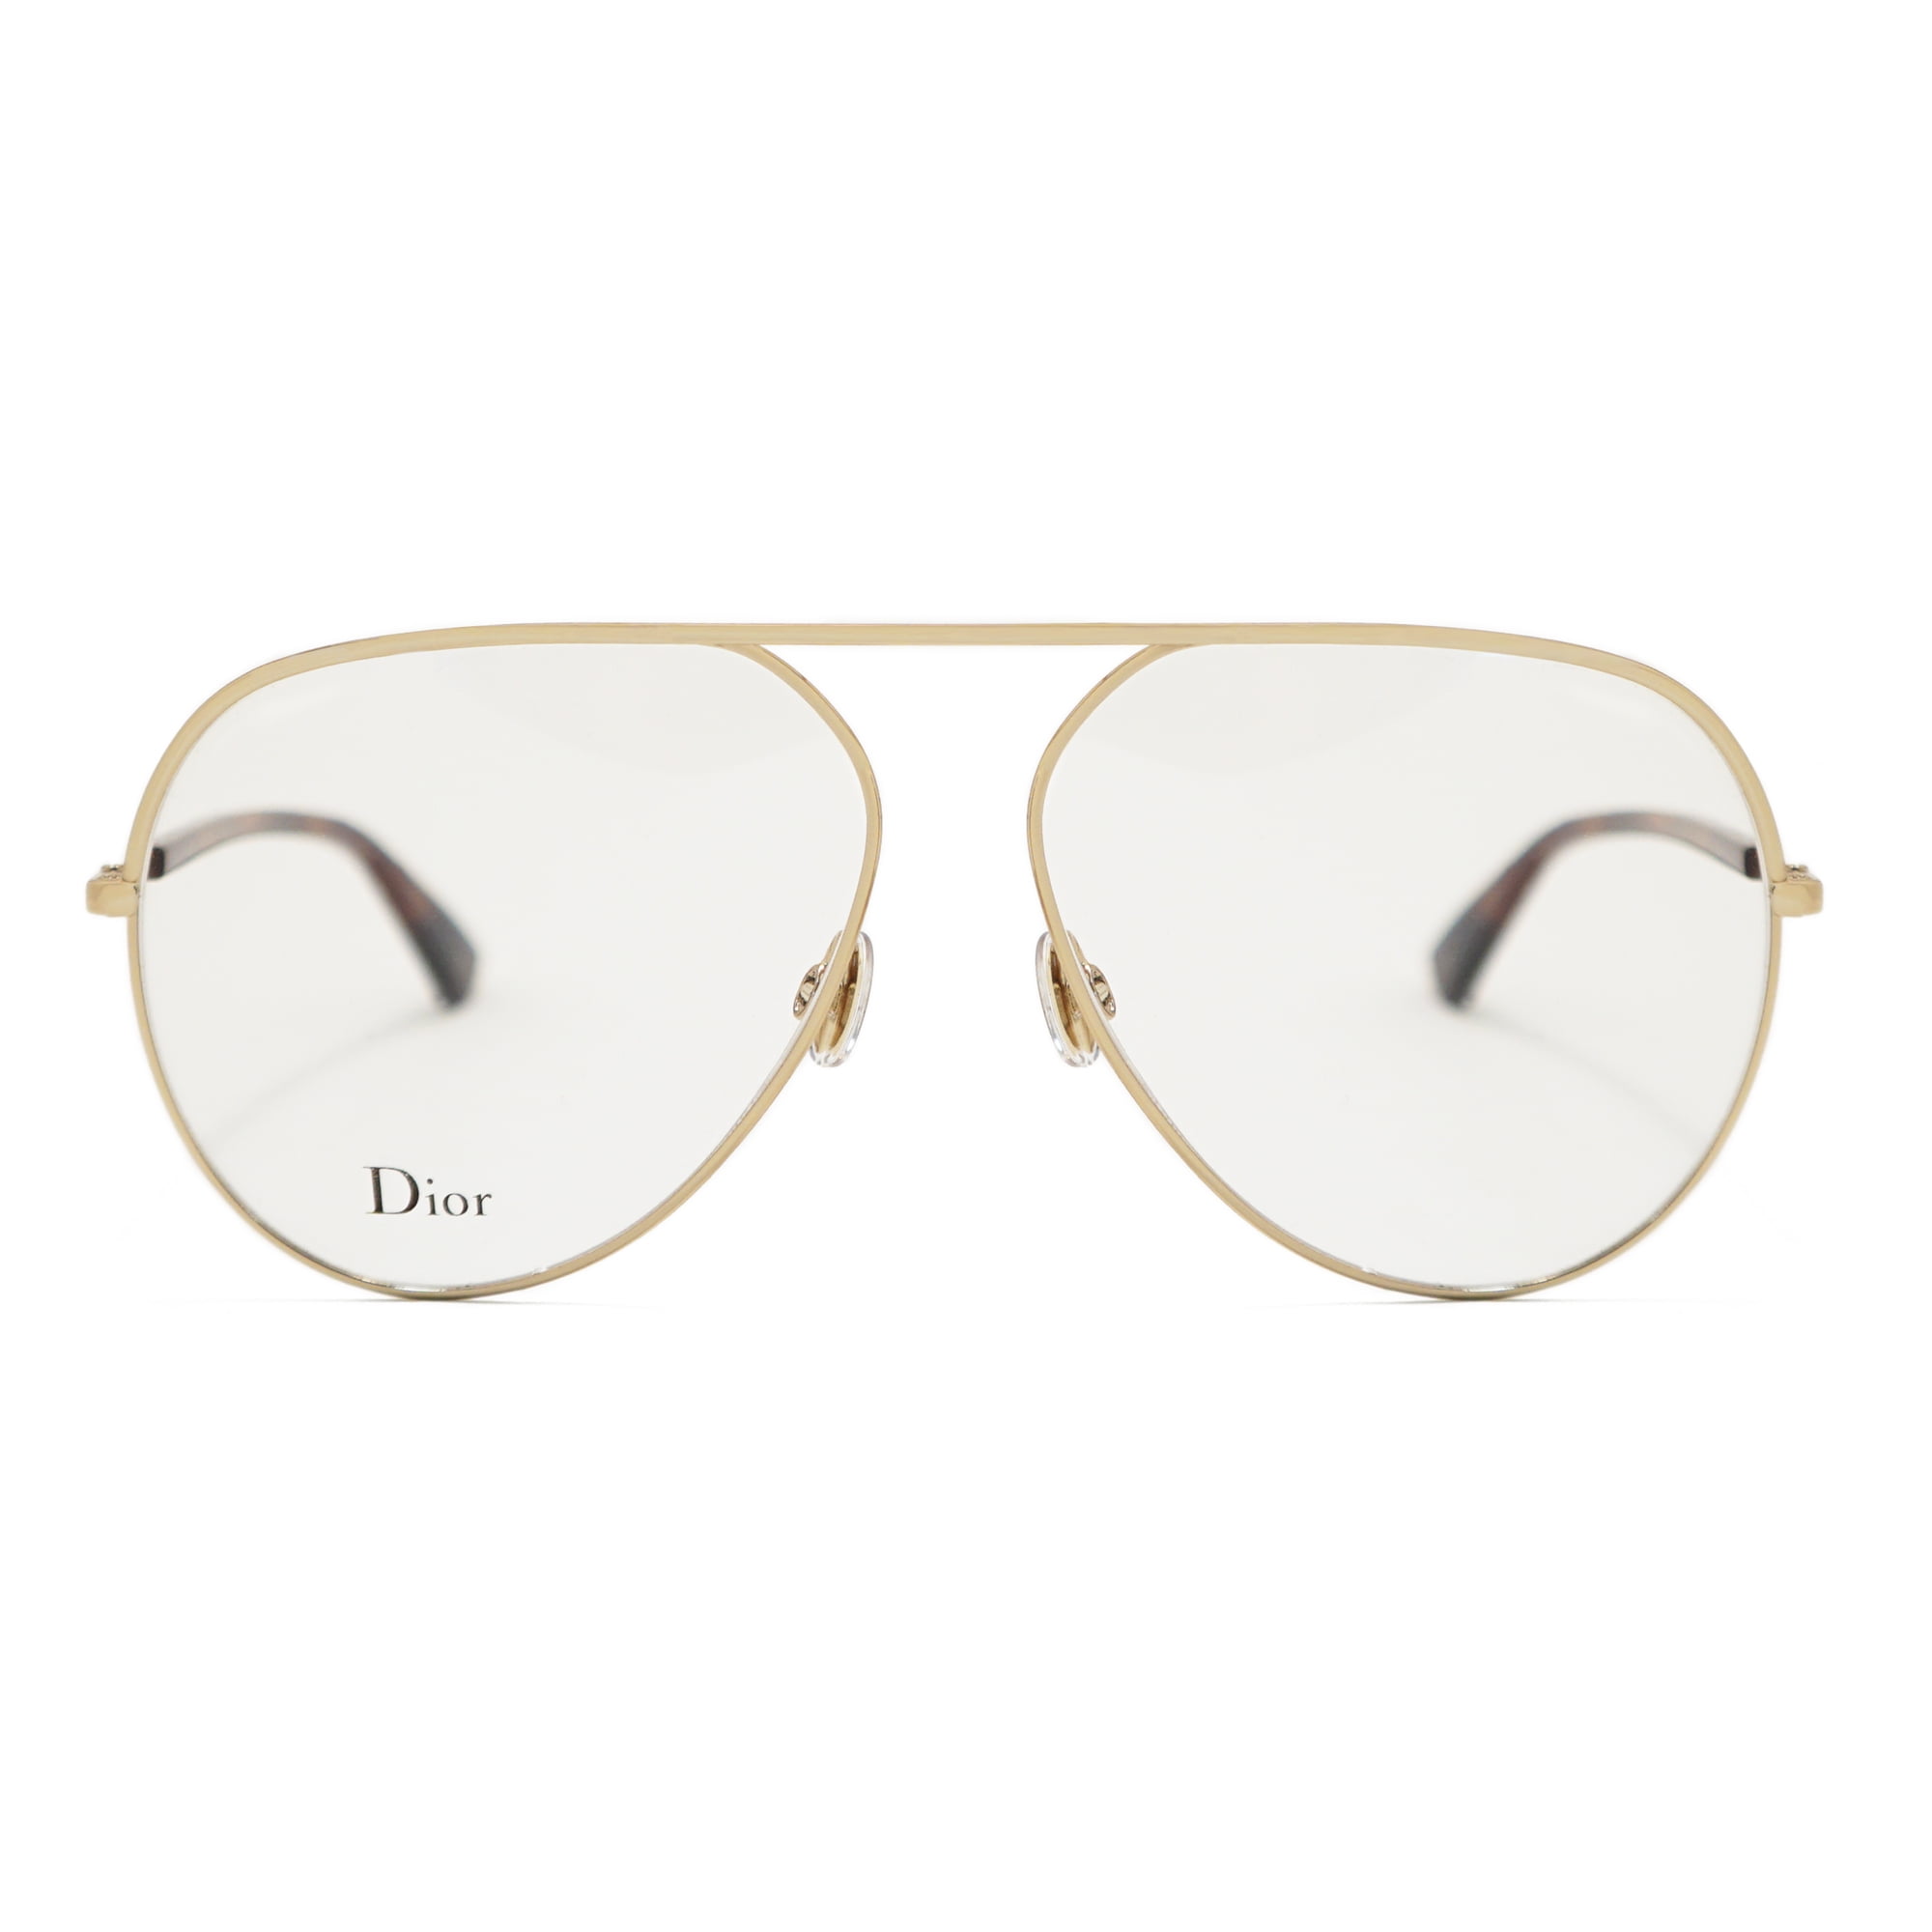 Christian Dior Aviator Glasses Essence 